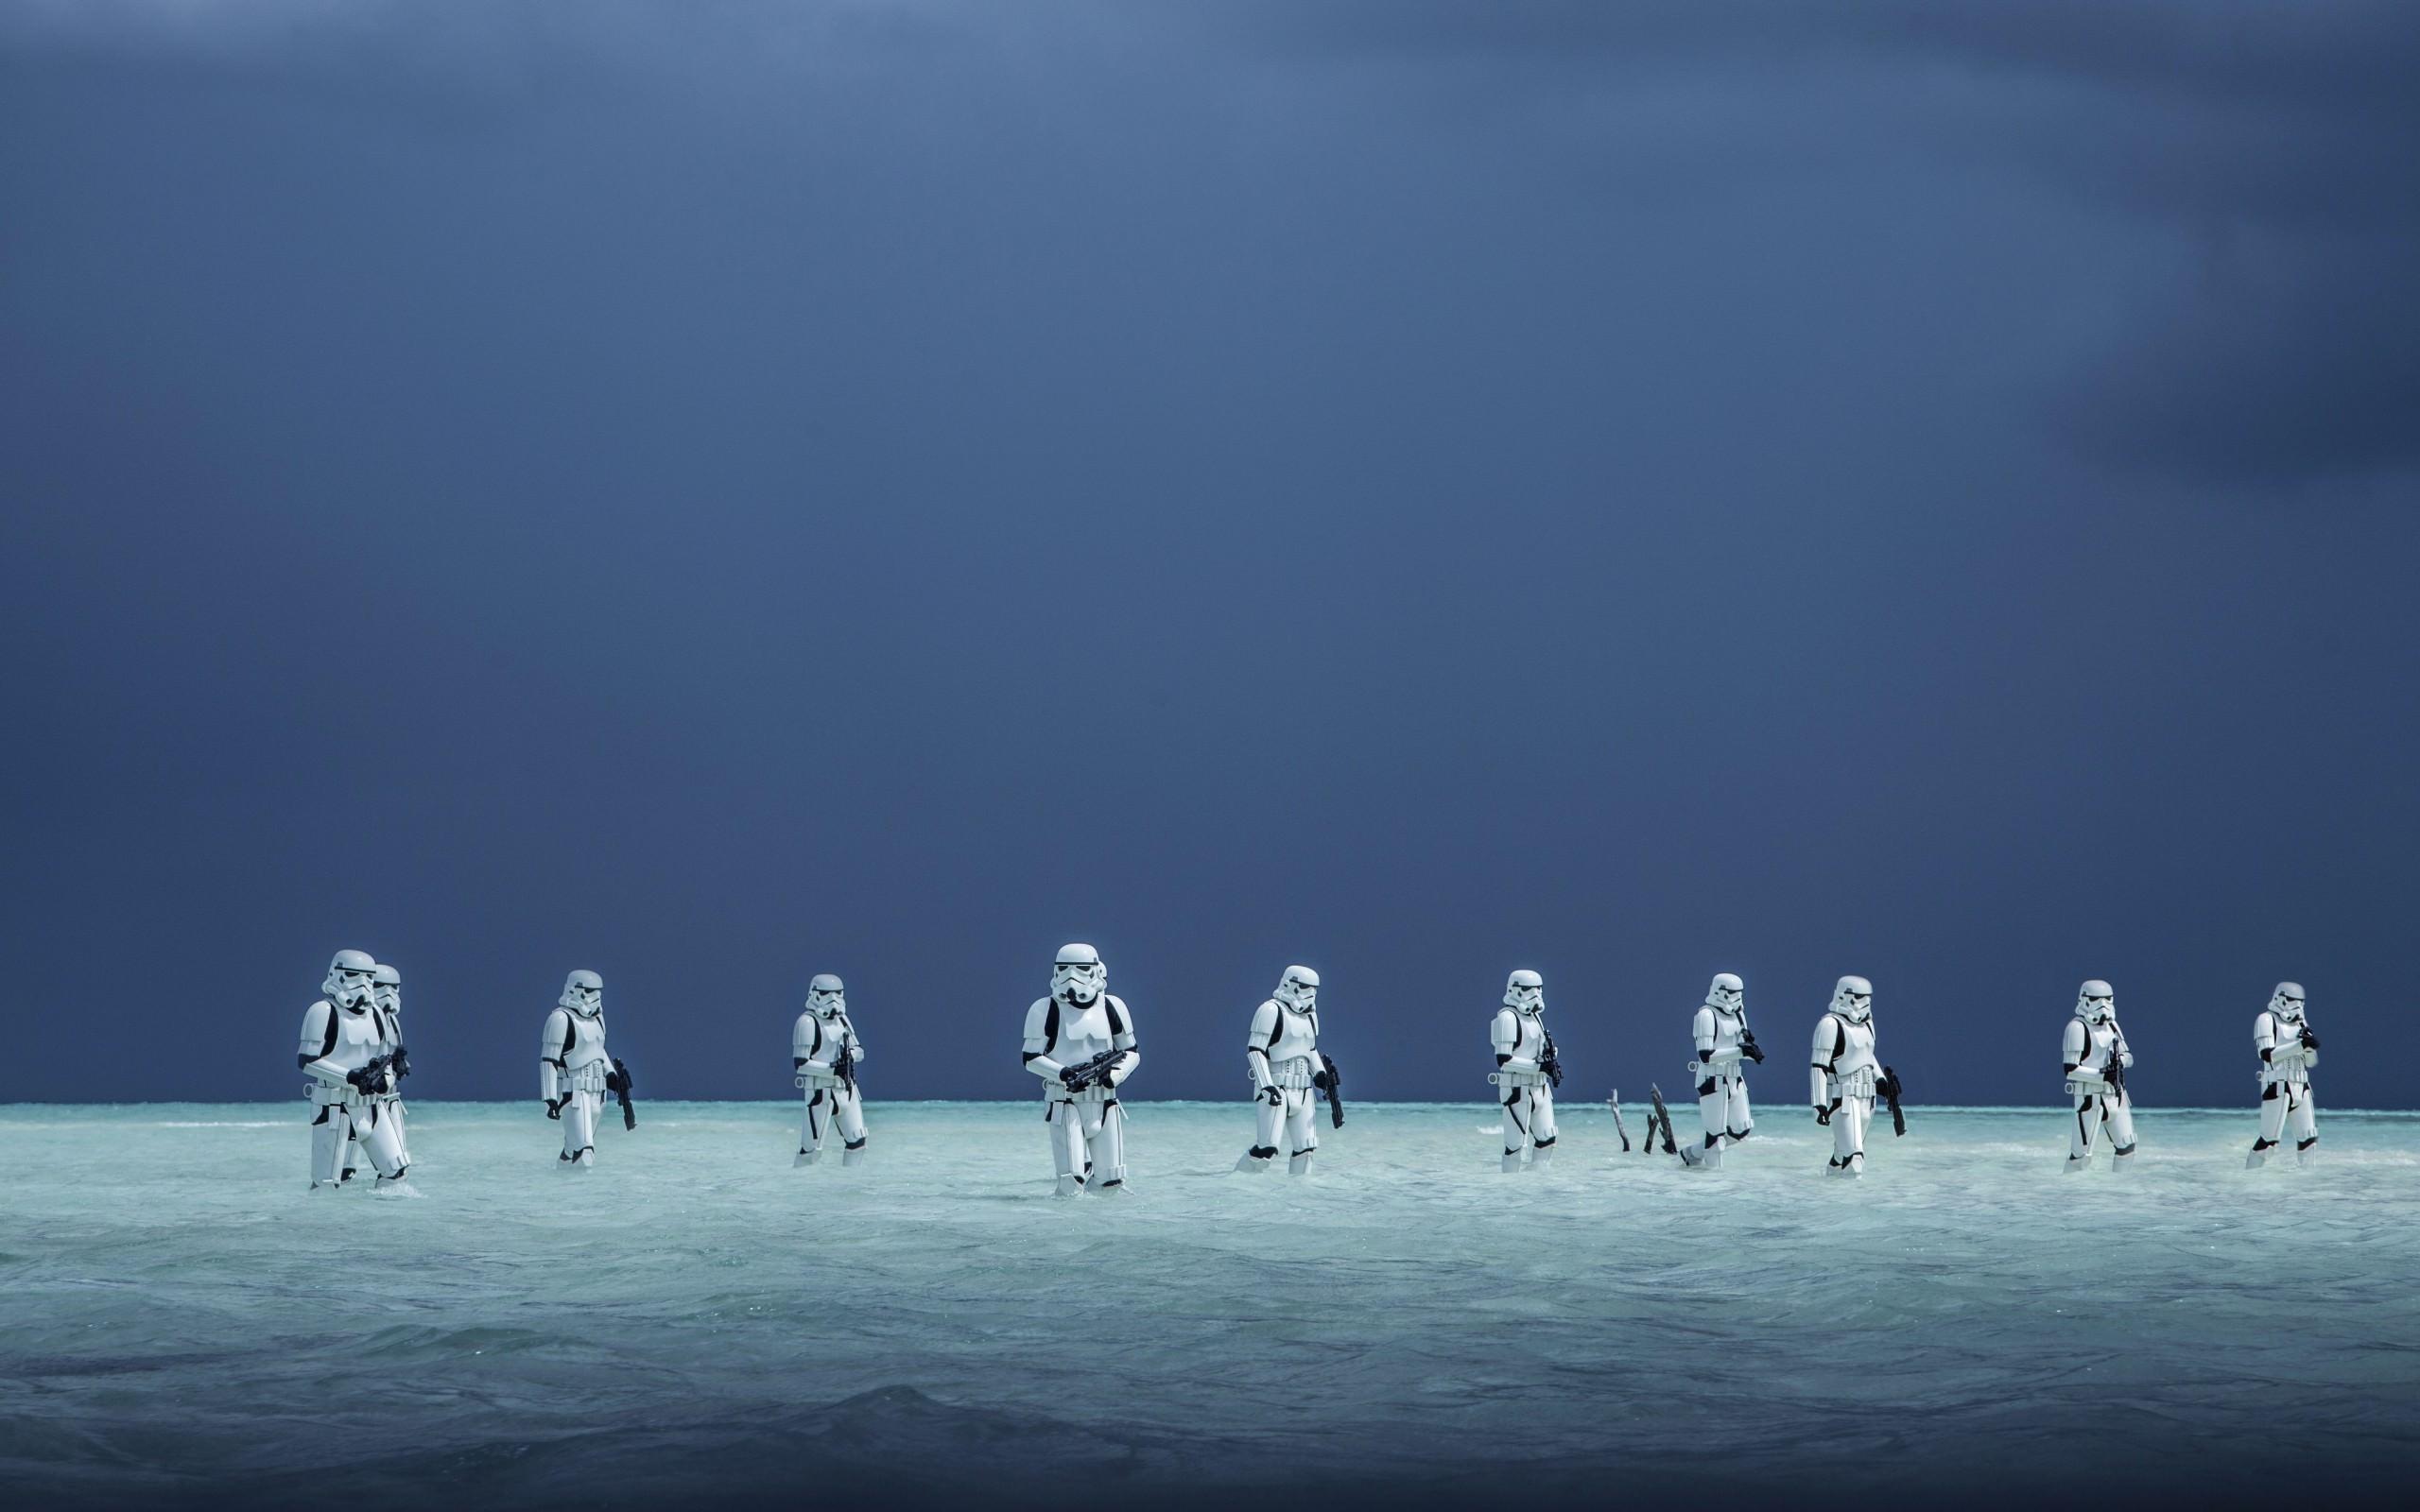 Star Wars 5k Wallpapers Top Free Star Wars 5k Backgrounds